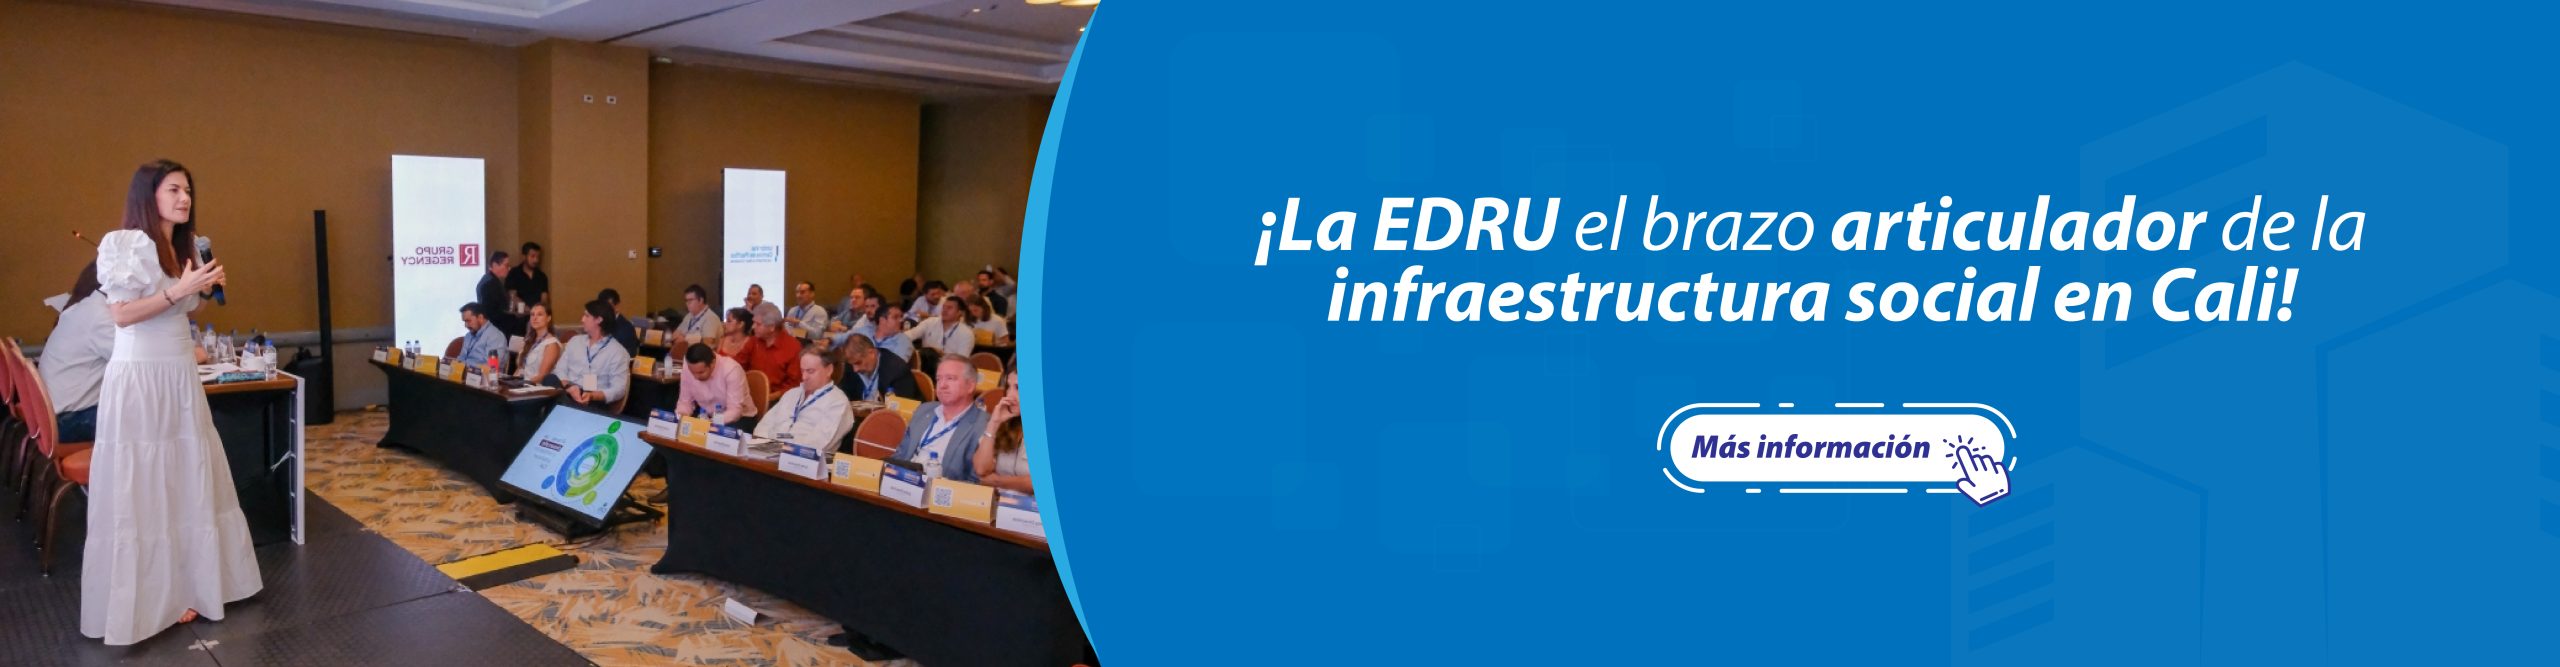 ¡La EDRU el brazo articulador de la infraestructura social en Cali!